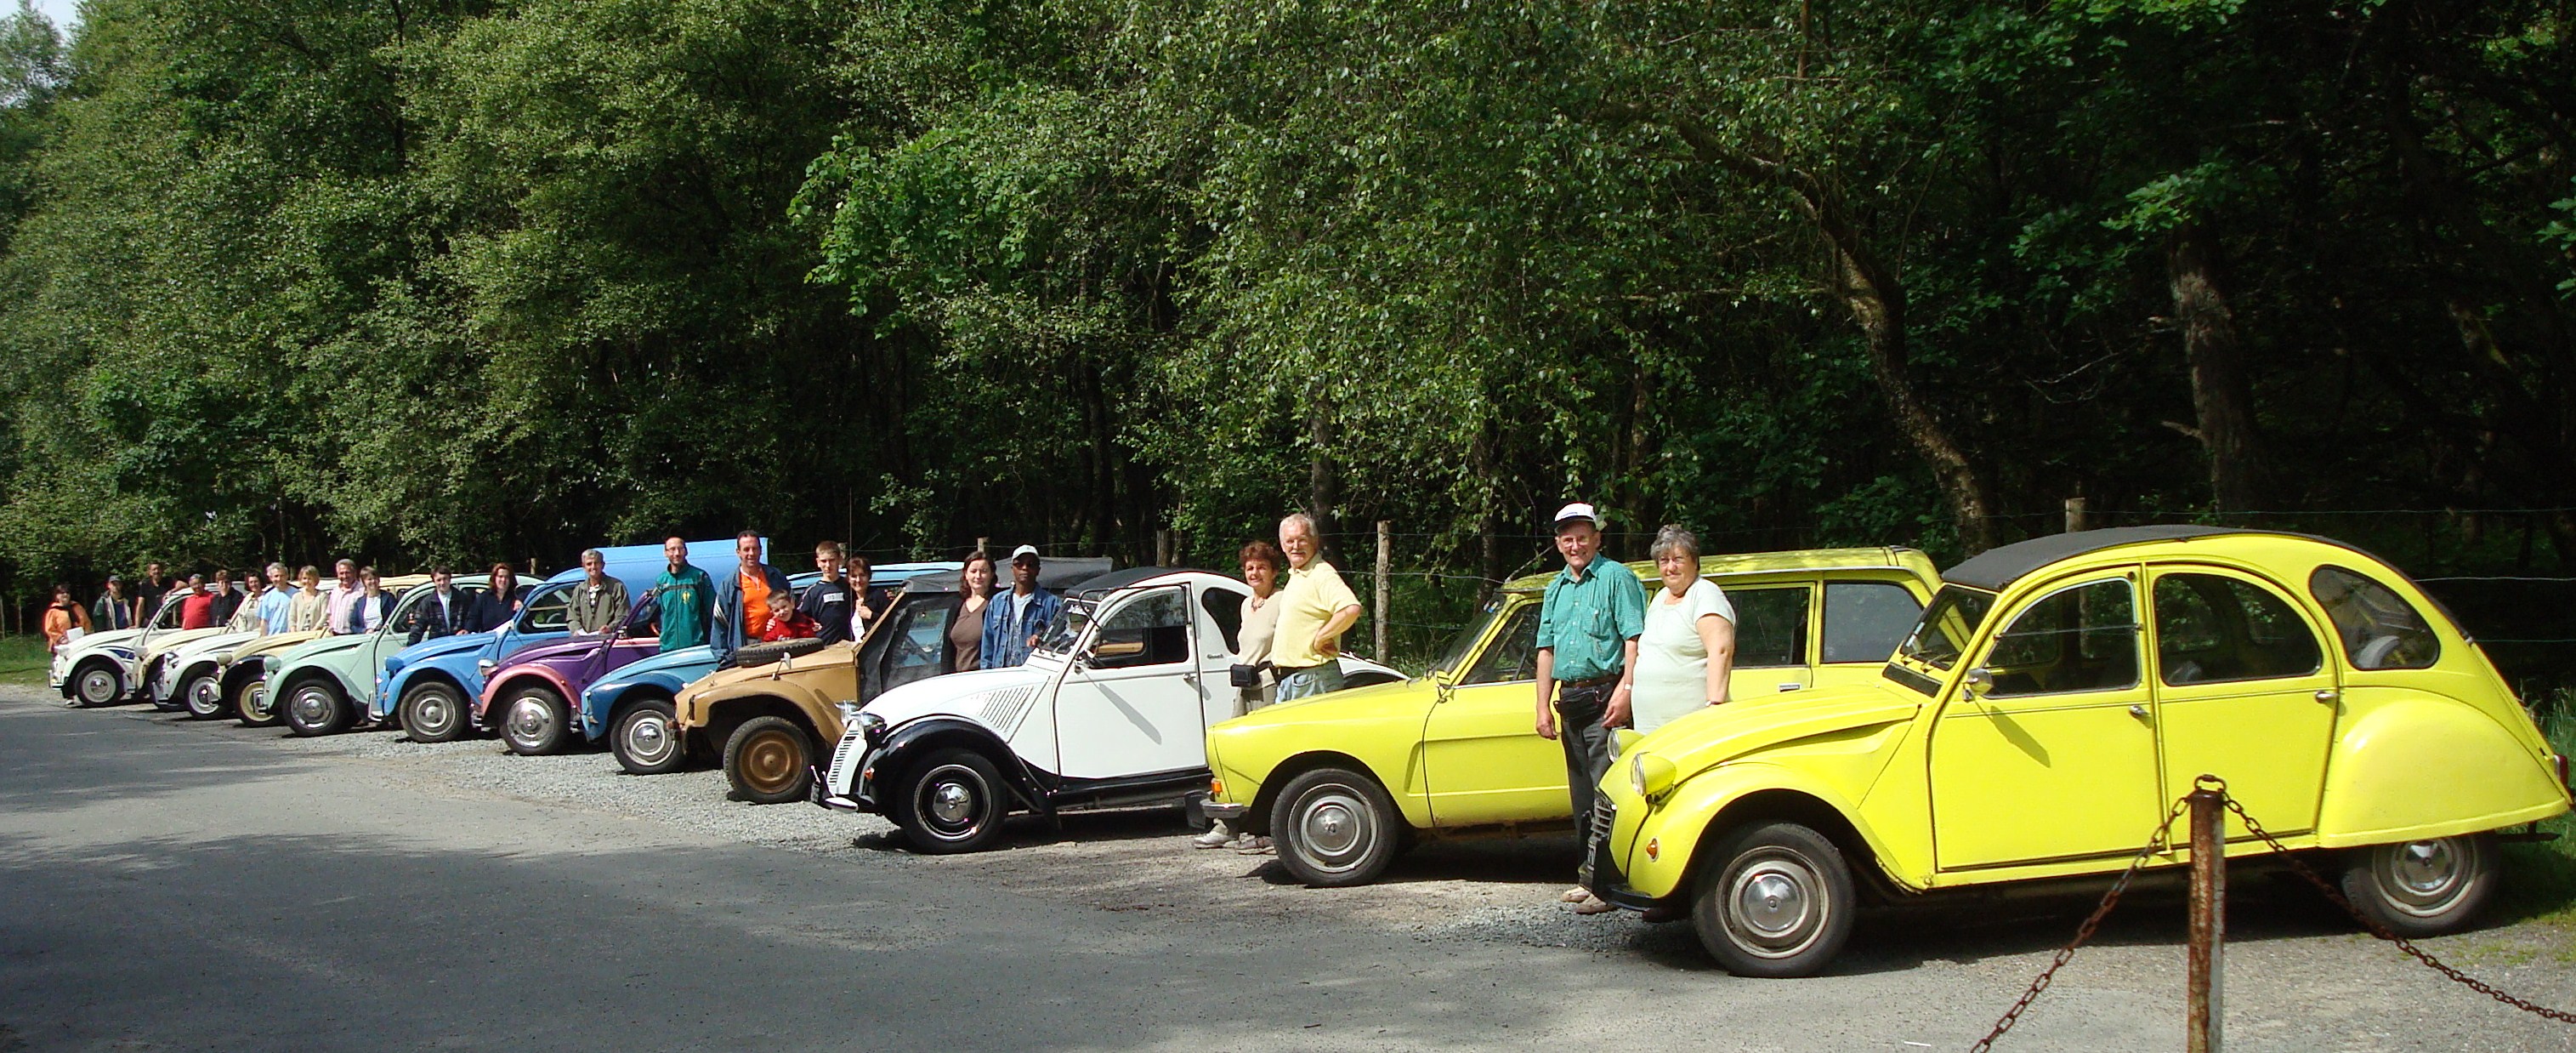 Rallye touristique - Juin 2008 - (1)